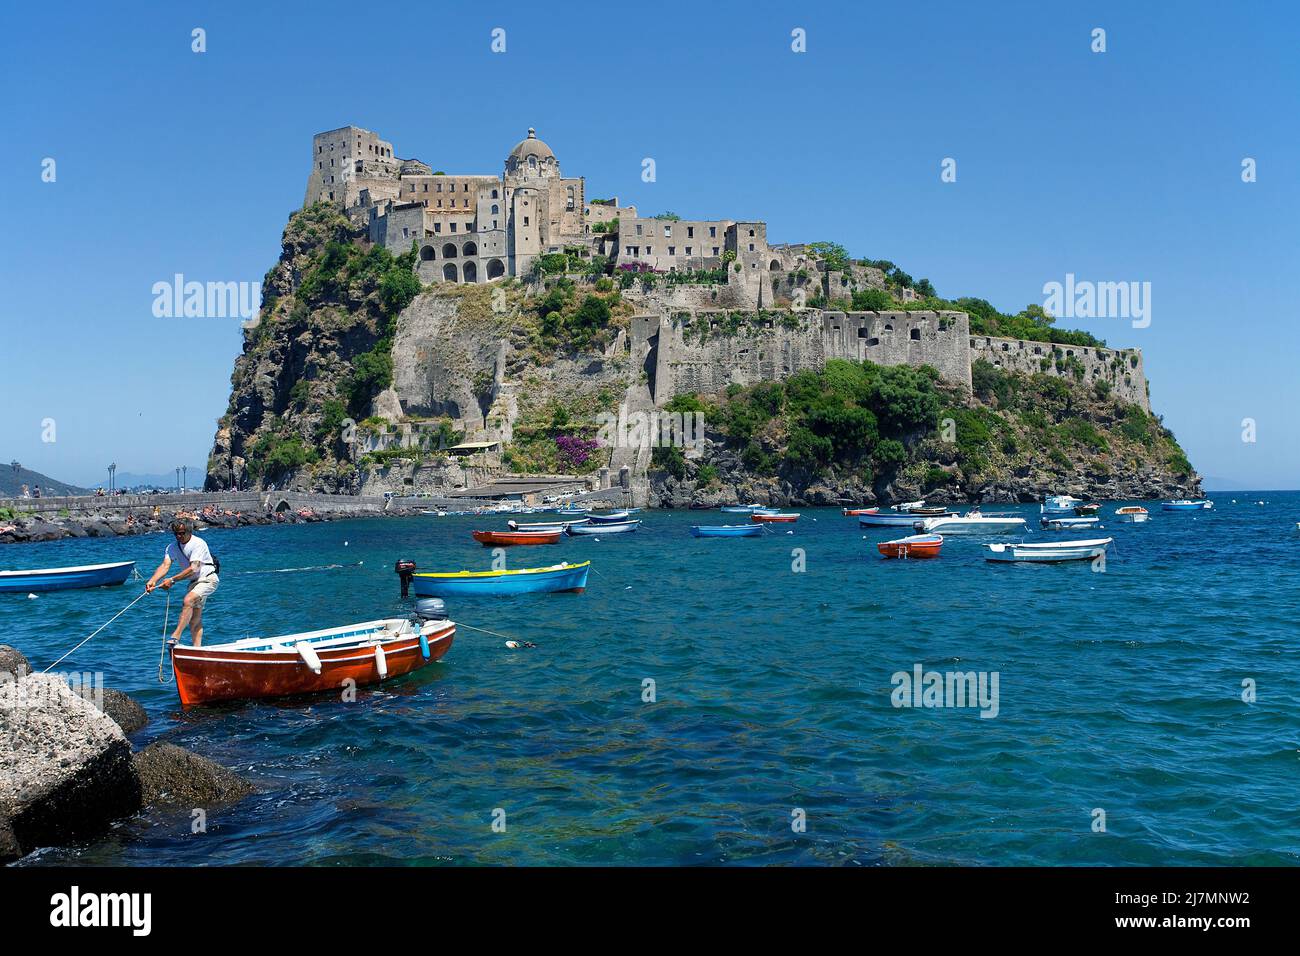 Fishing boats at Castello Aragonese at Ischia Island, Italy, Tyrrhenian Sea, Mediterranean sea Stock Photo